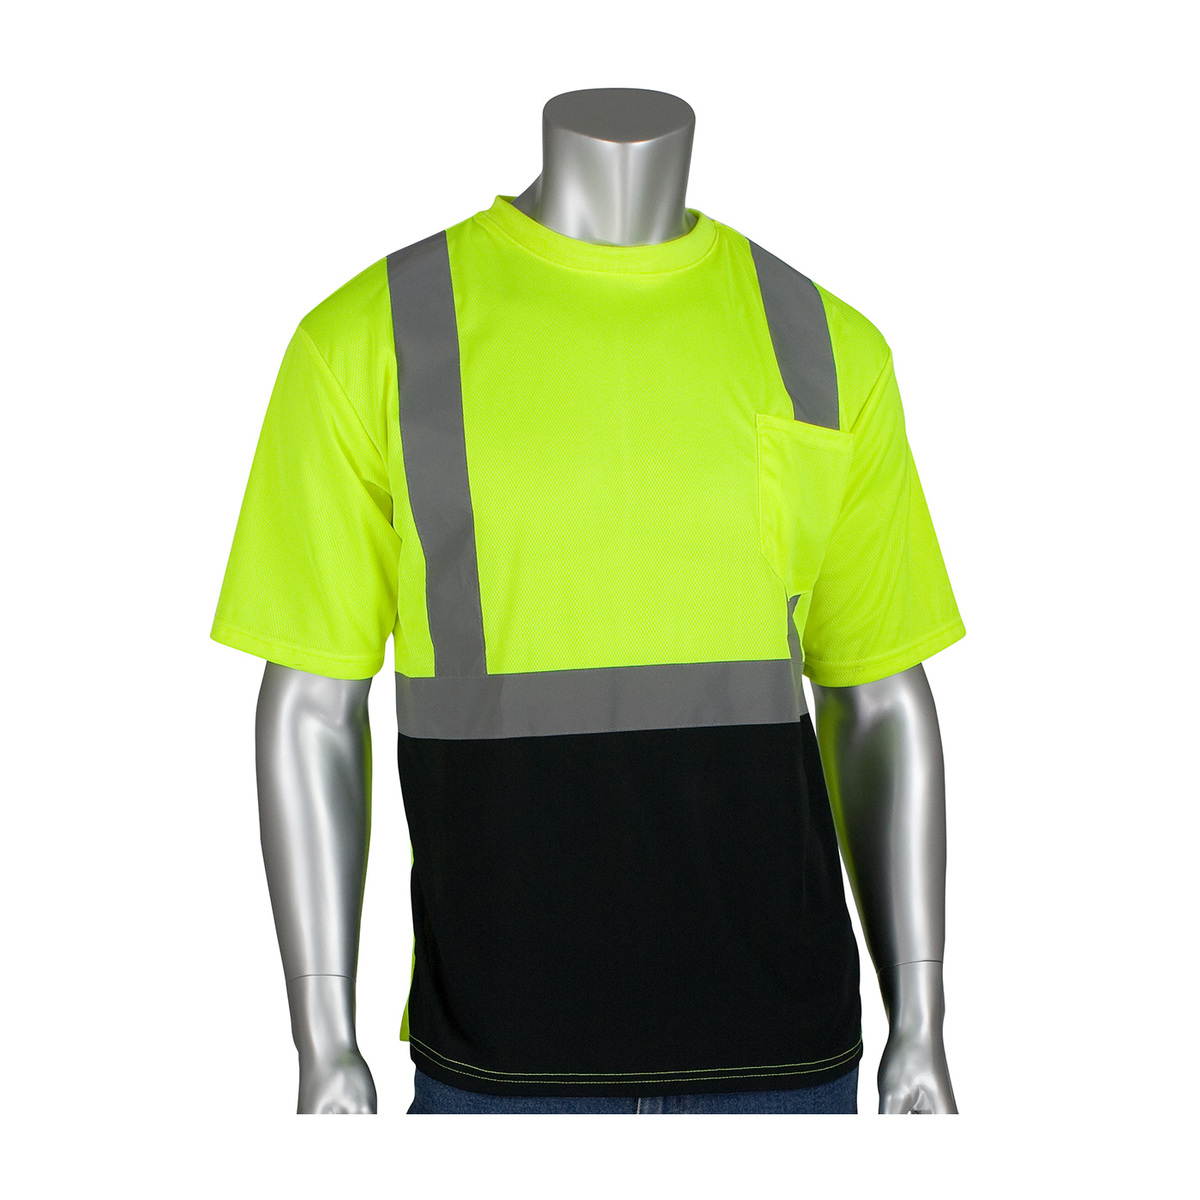 PIP® 3X Hi-Viz Yellow/Hi-Viz Orange 1 Polyester/Birdseye Mesh Two-Tone Short Sleeve Shirt - PIP3121250BLY3X